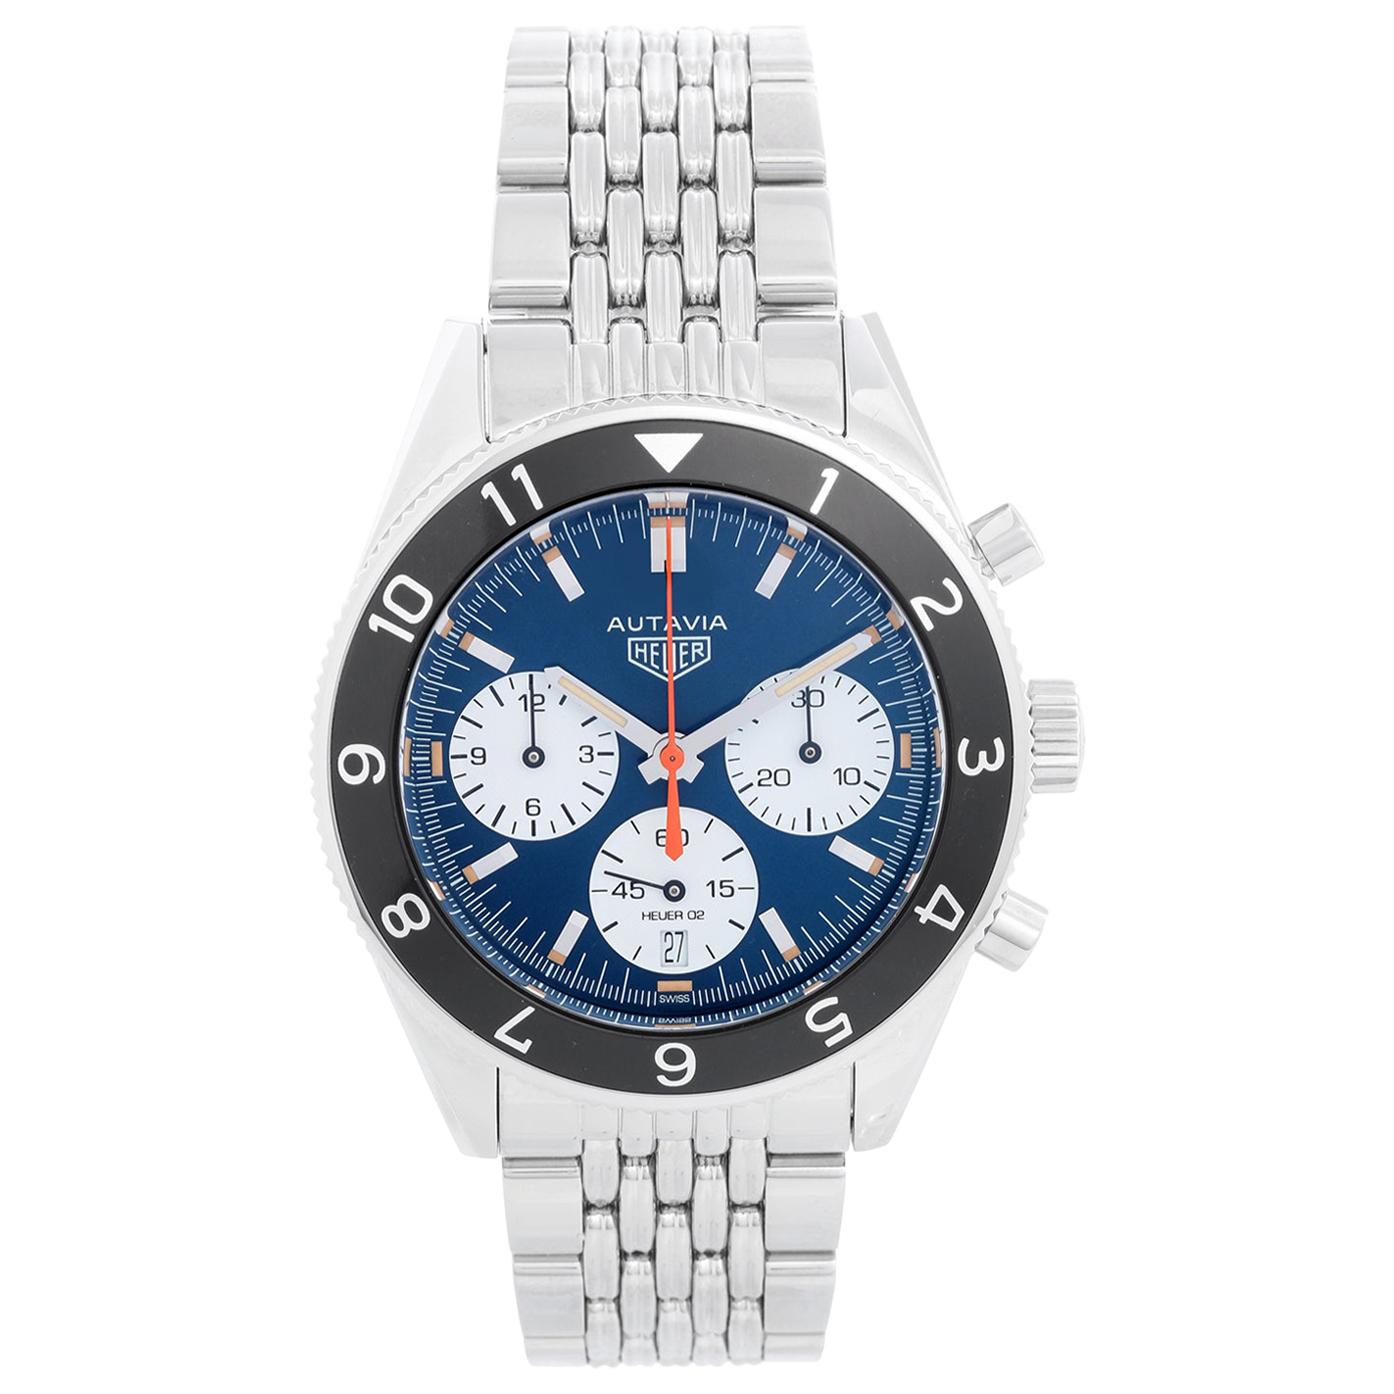 TAG Heuer Autavia Limited Edition Watches of Switzerland Men’s Watch